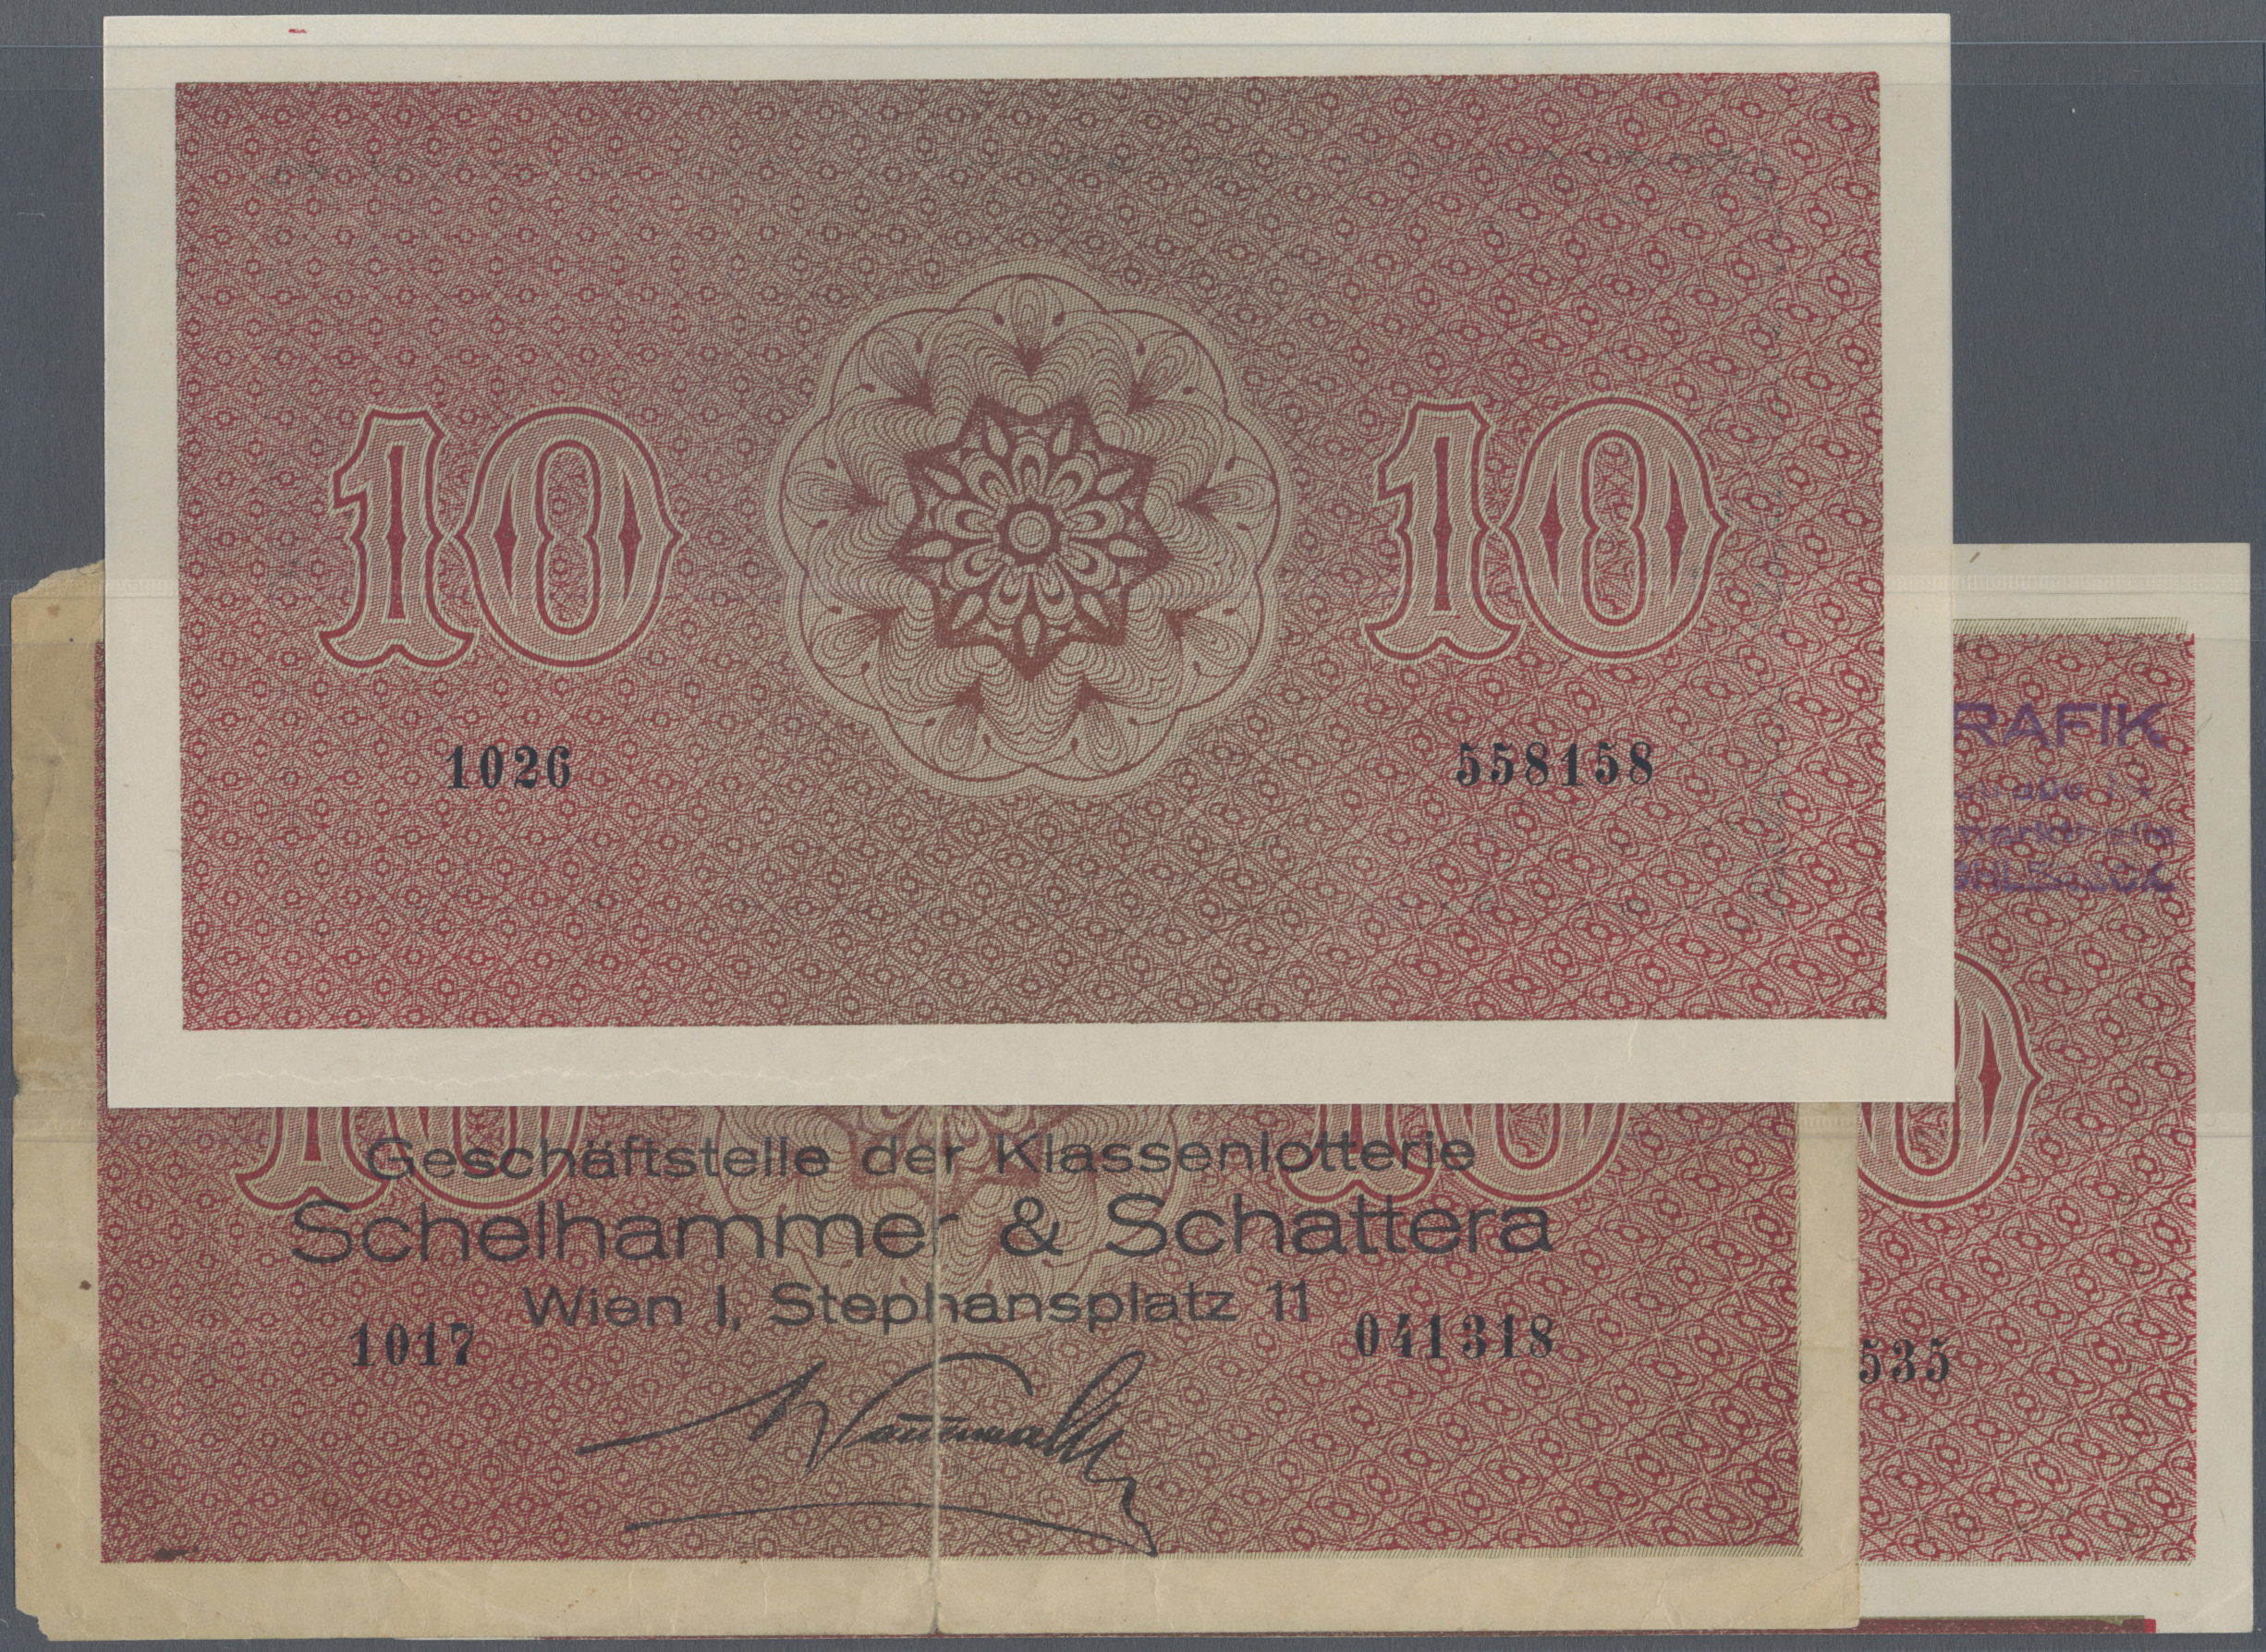 Lot 158 - Austria / Österreich | Banknoten  -  Auktionshaus Christoph Gärtner GmbH & Co. KG Bank notes Auction #42 Day 1